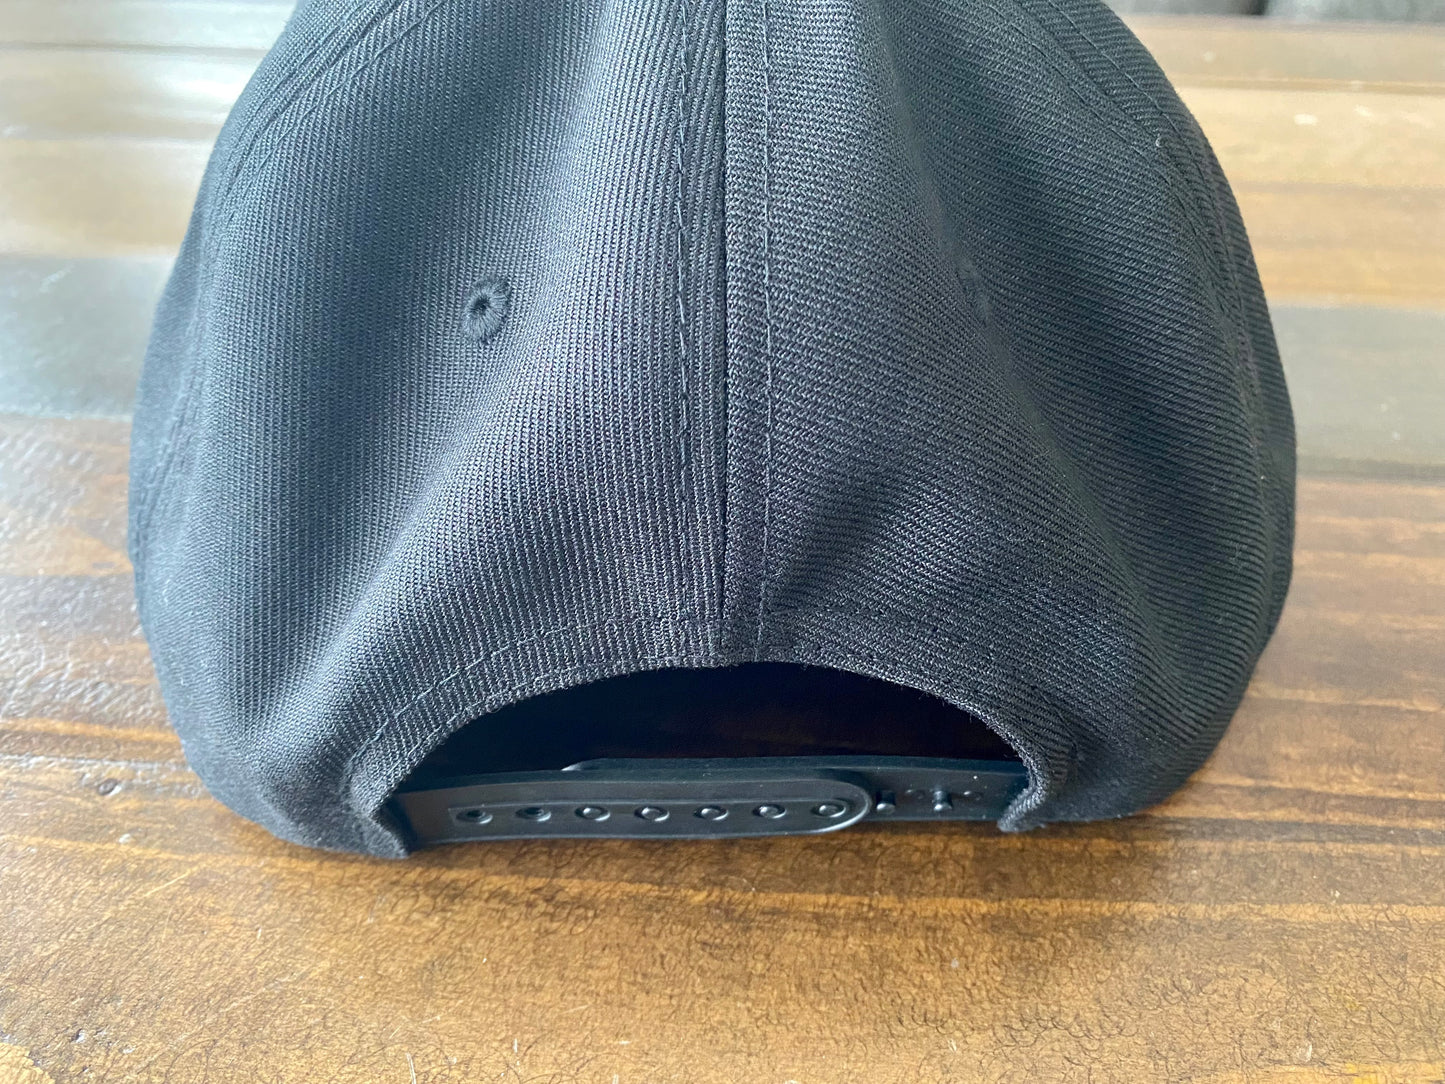 WFO 4 LIFE ™ - "Checker Trademark" - Non Mesh Snapback Hat -Black